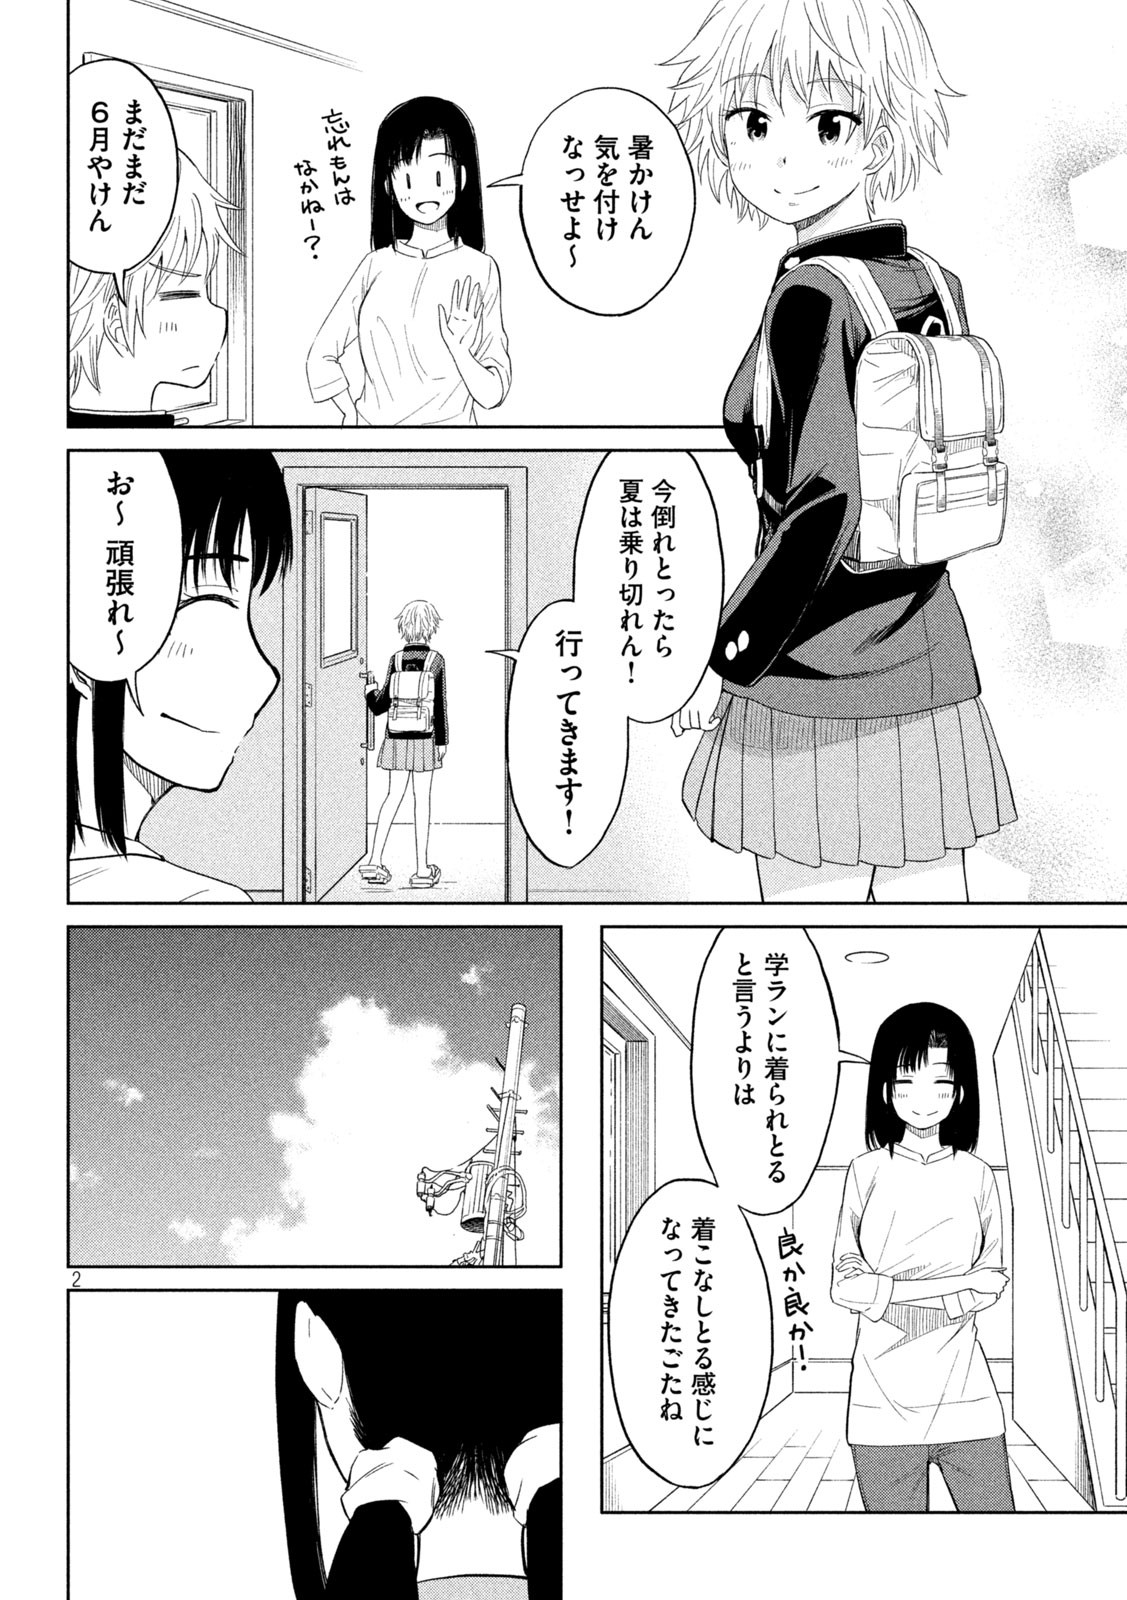 Koharu haru! - Chapter 106 - Page 2